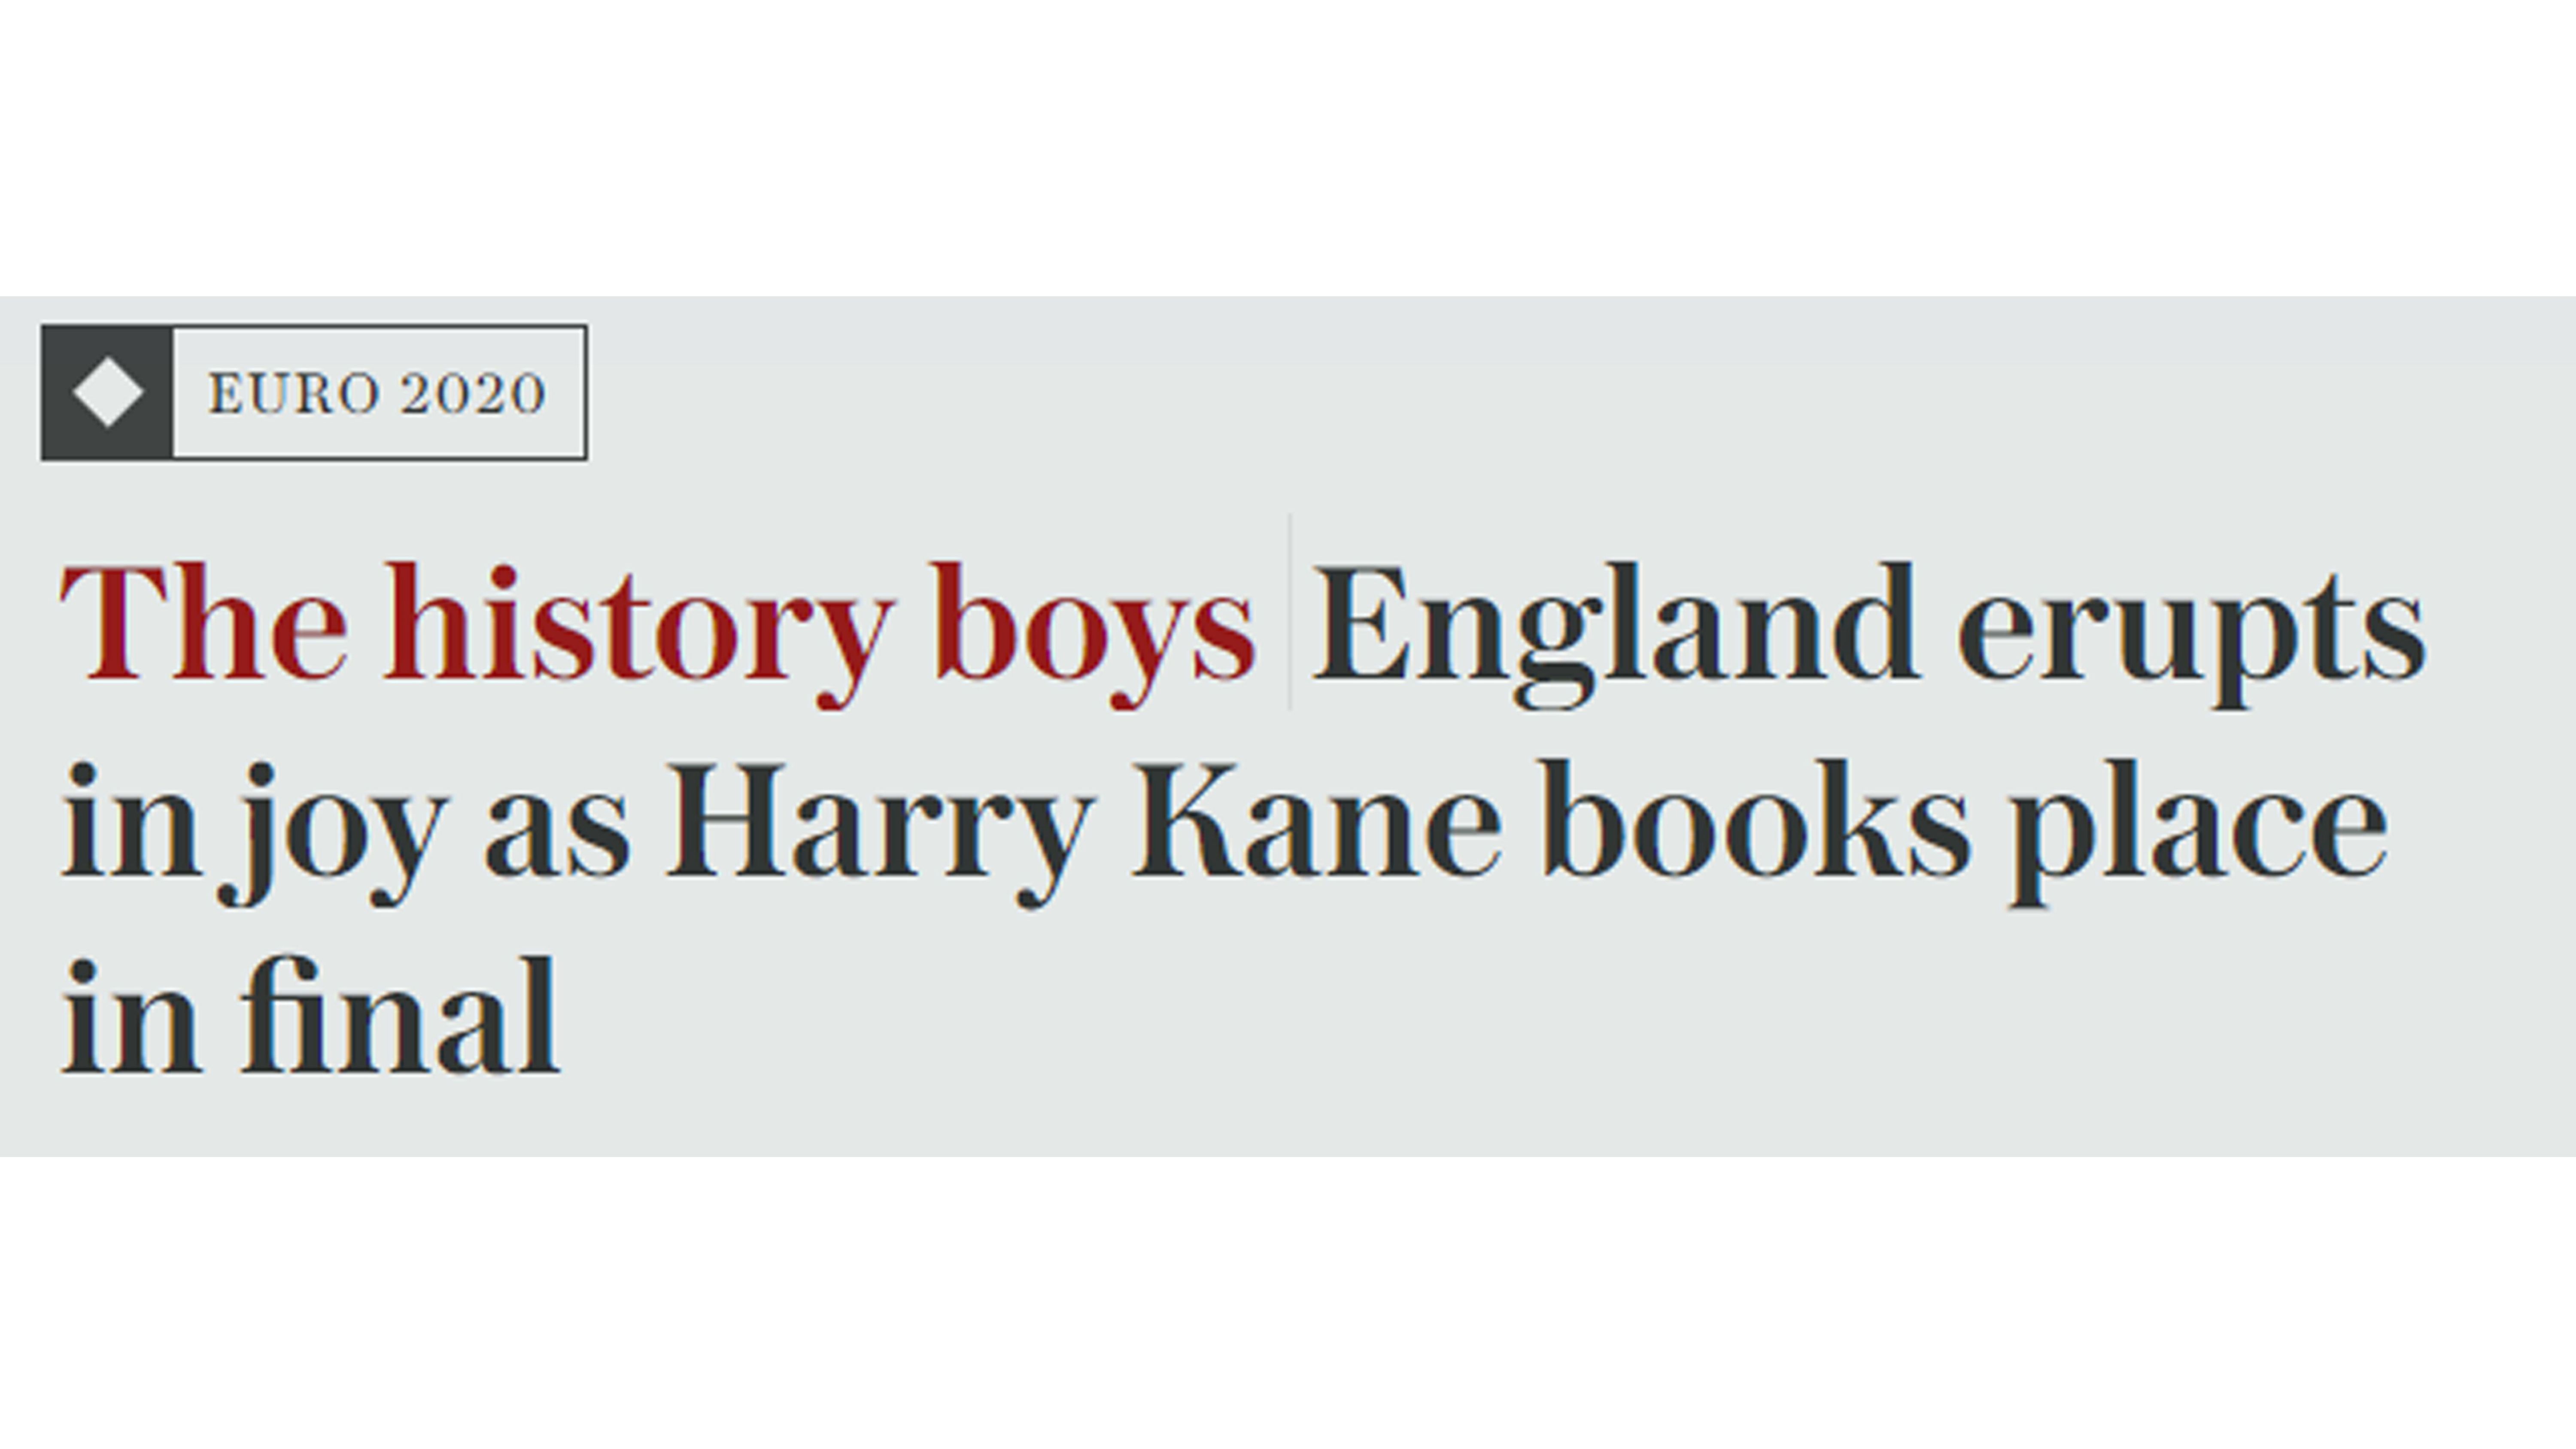 
                <strong>The Telegraph: "The history boys"</strong><br>
                "England bricht in Freude aus, nachdem Harry Kane uns einen Platz im Finale bucht" 
              